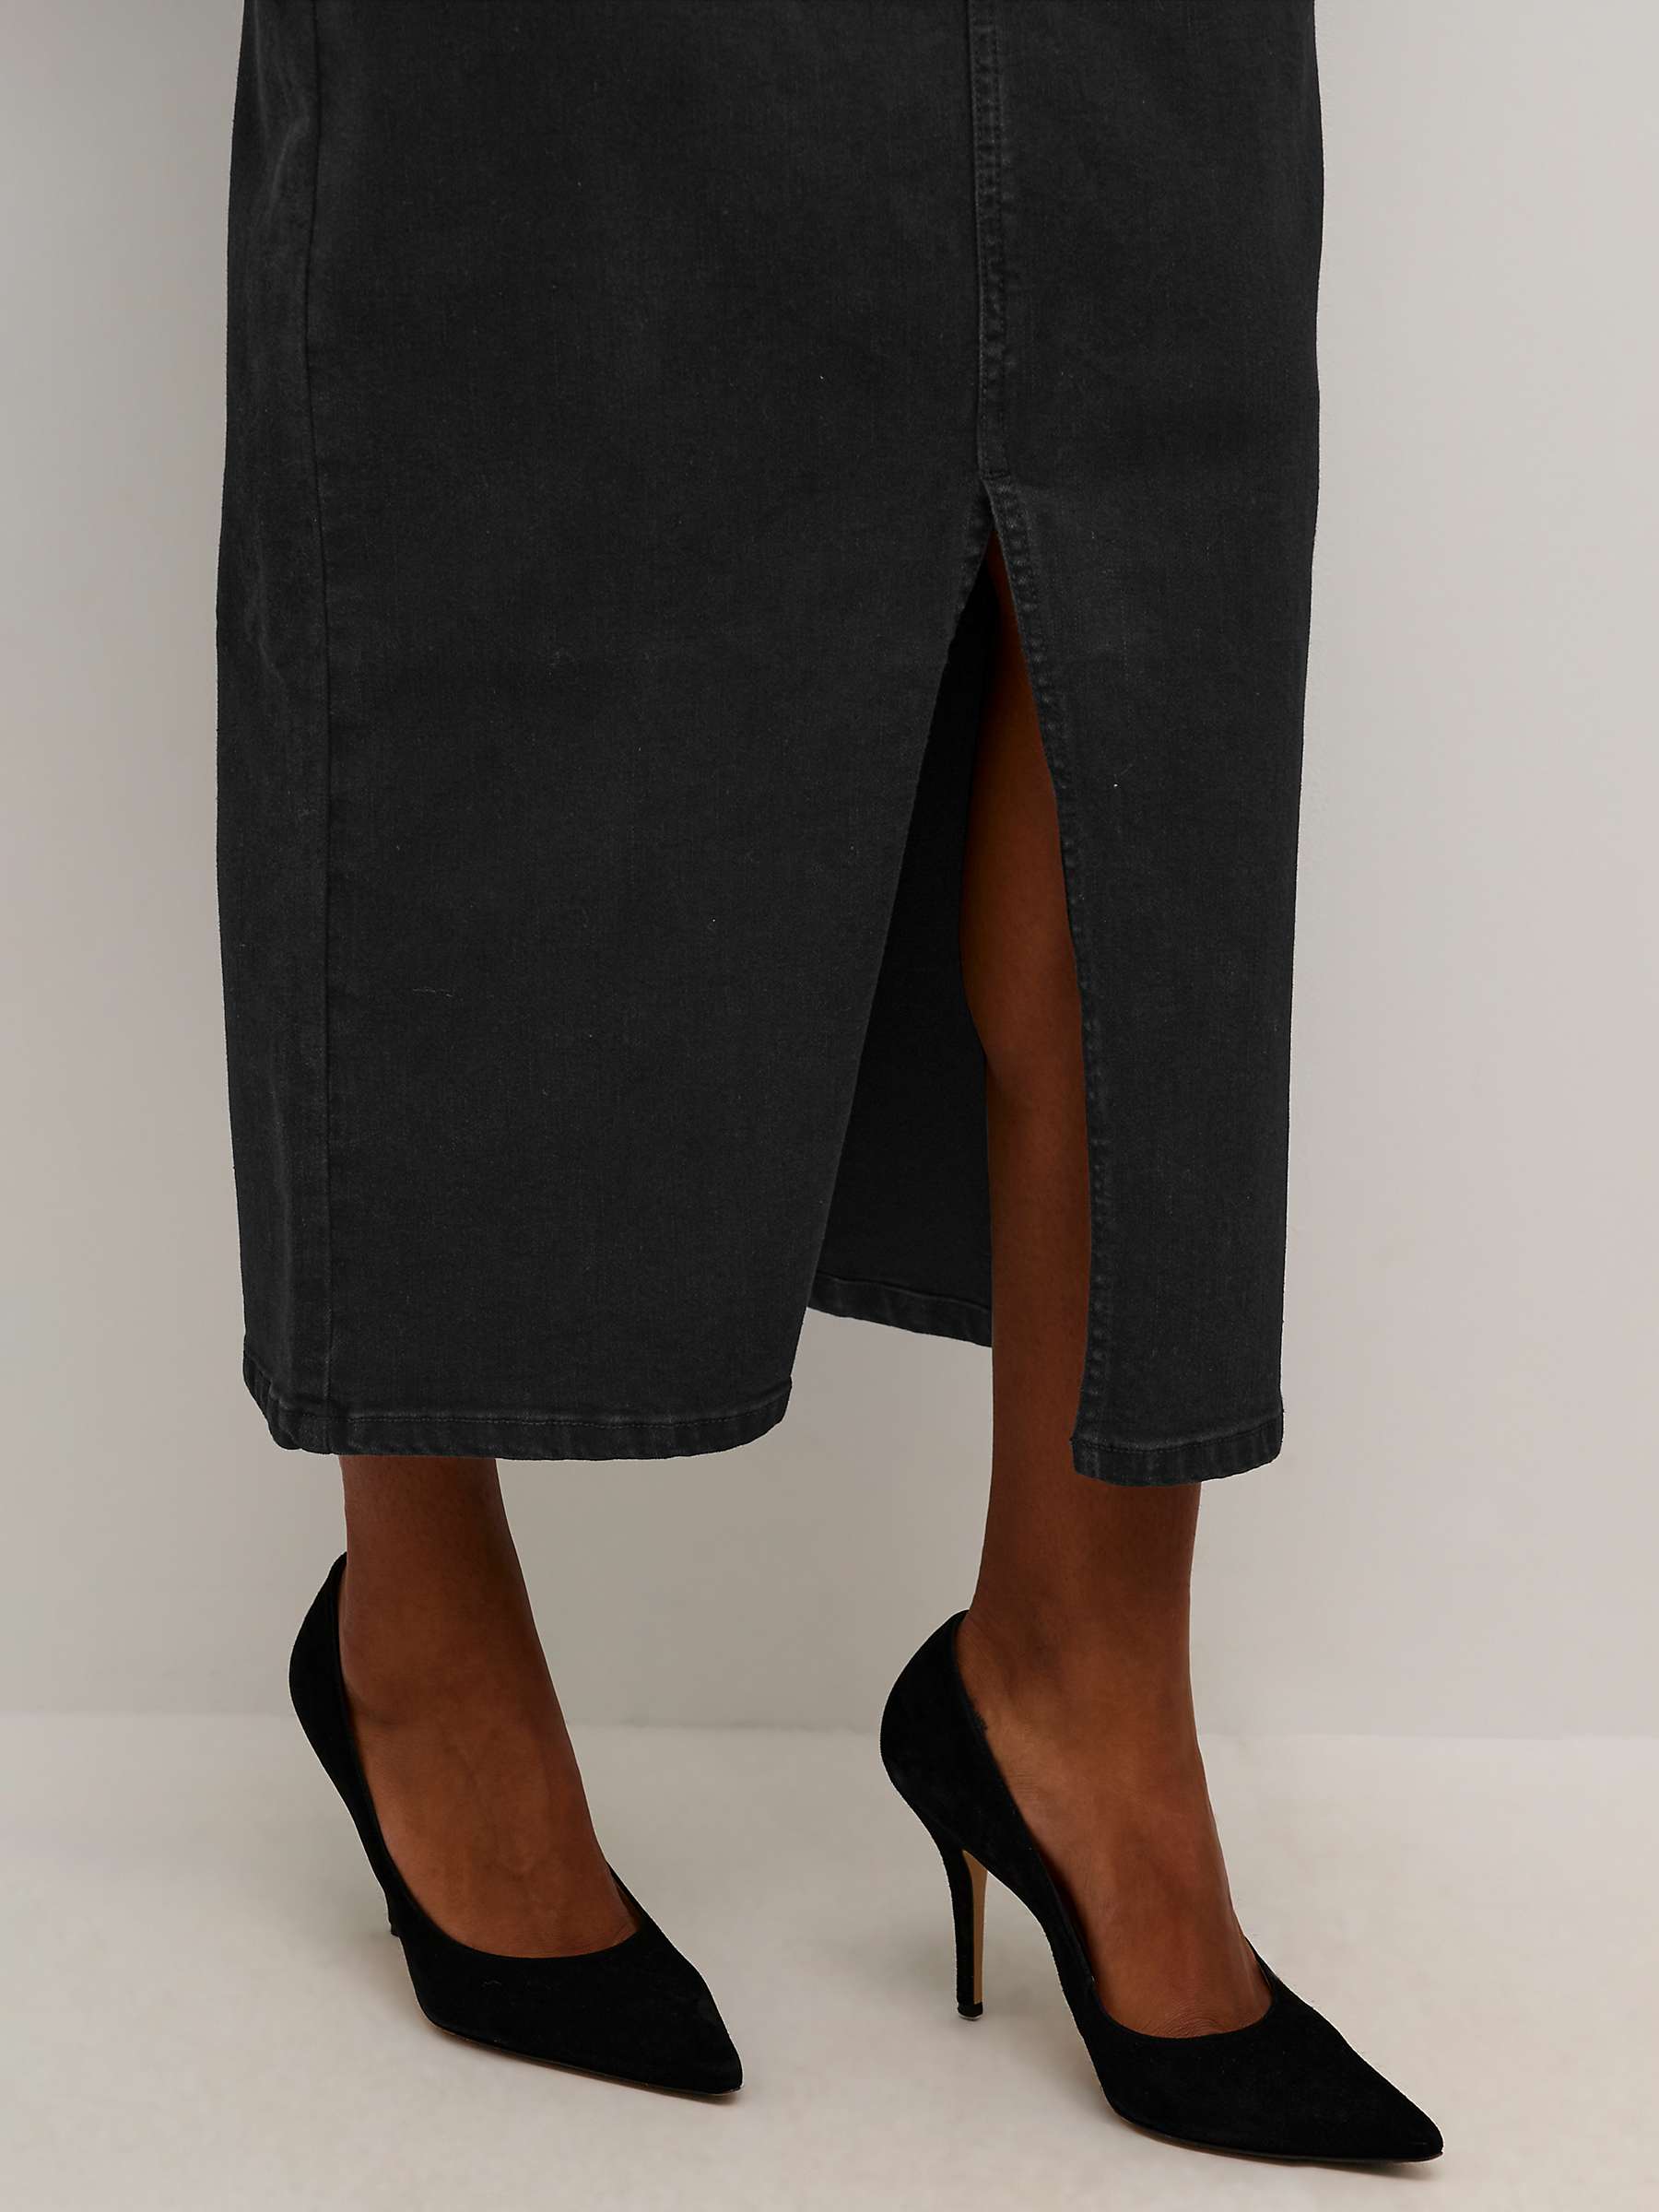 KAFFE Sinem Maxi Denim Skirt, Deep Black at John Lewis & Partners